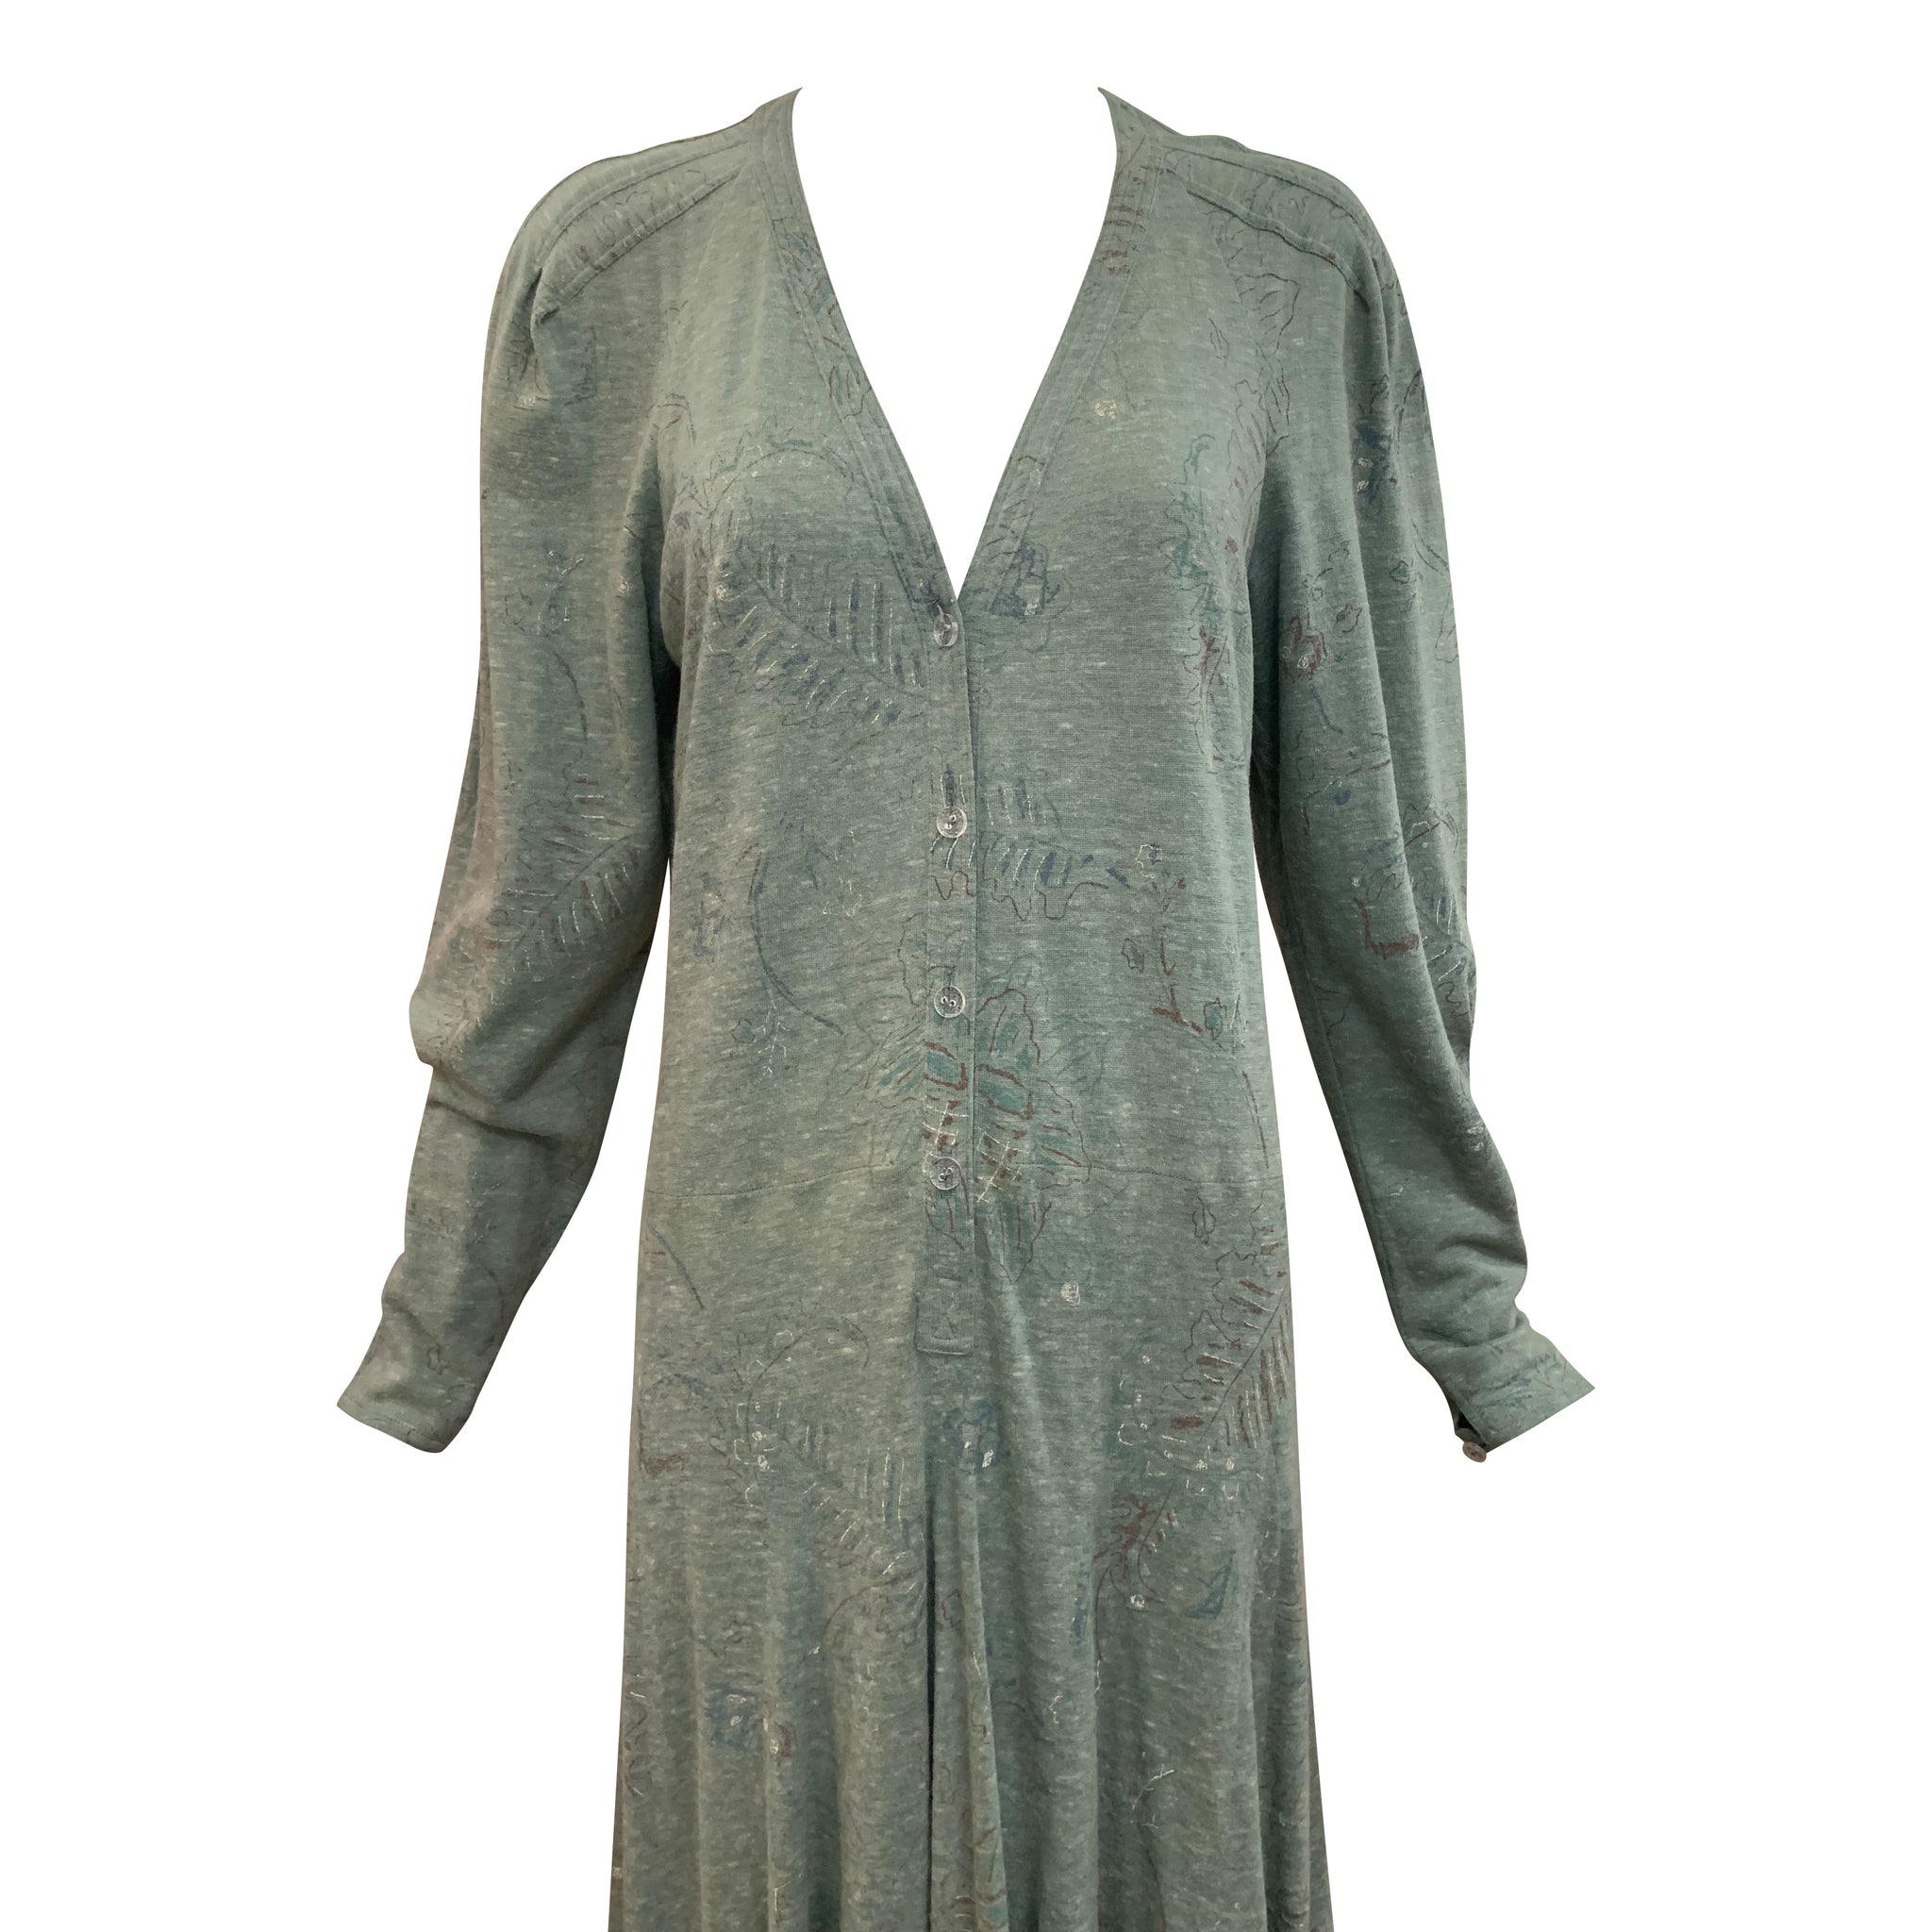 Jean Muir 70s Green Printed Jersey Maxi Dress DETAIL 4 of 6